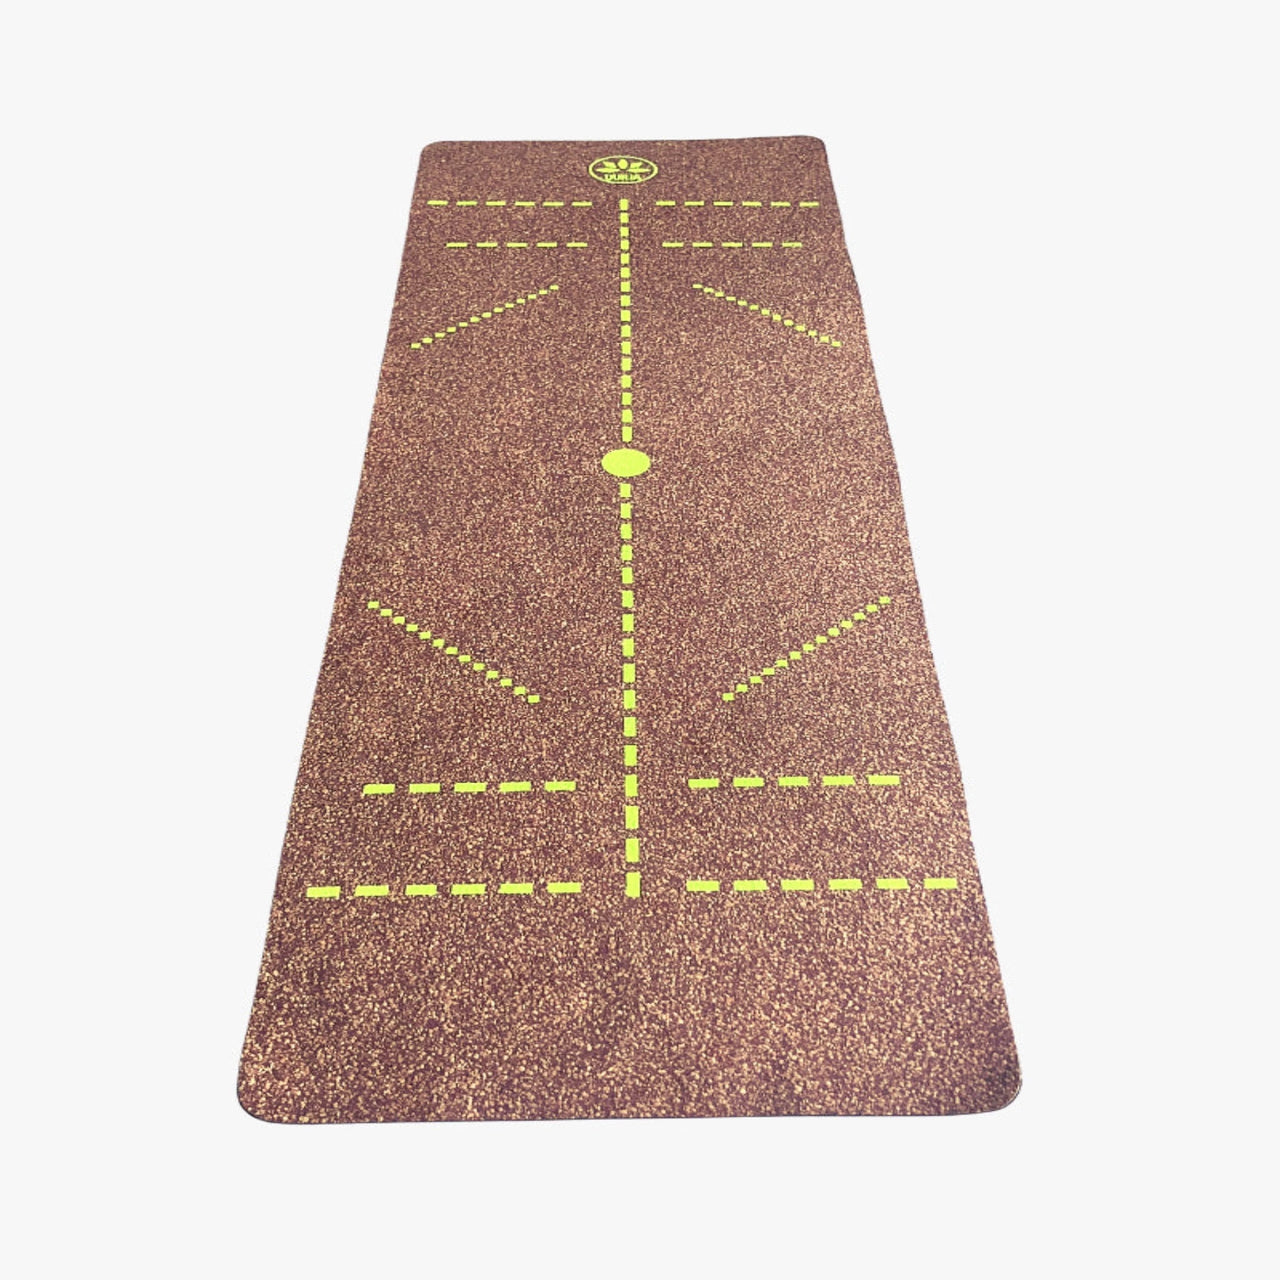 Uurja Naturals - Smooth Surface Grip Yoga Mat with Anti-Slip Cushion Base